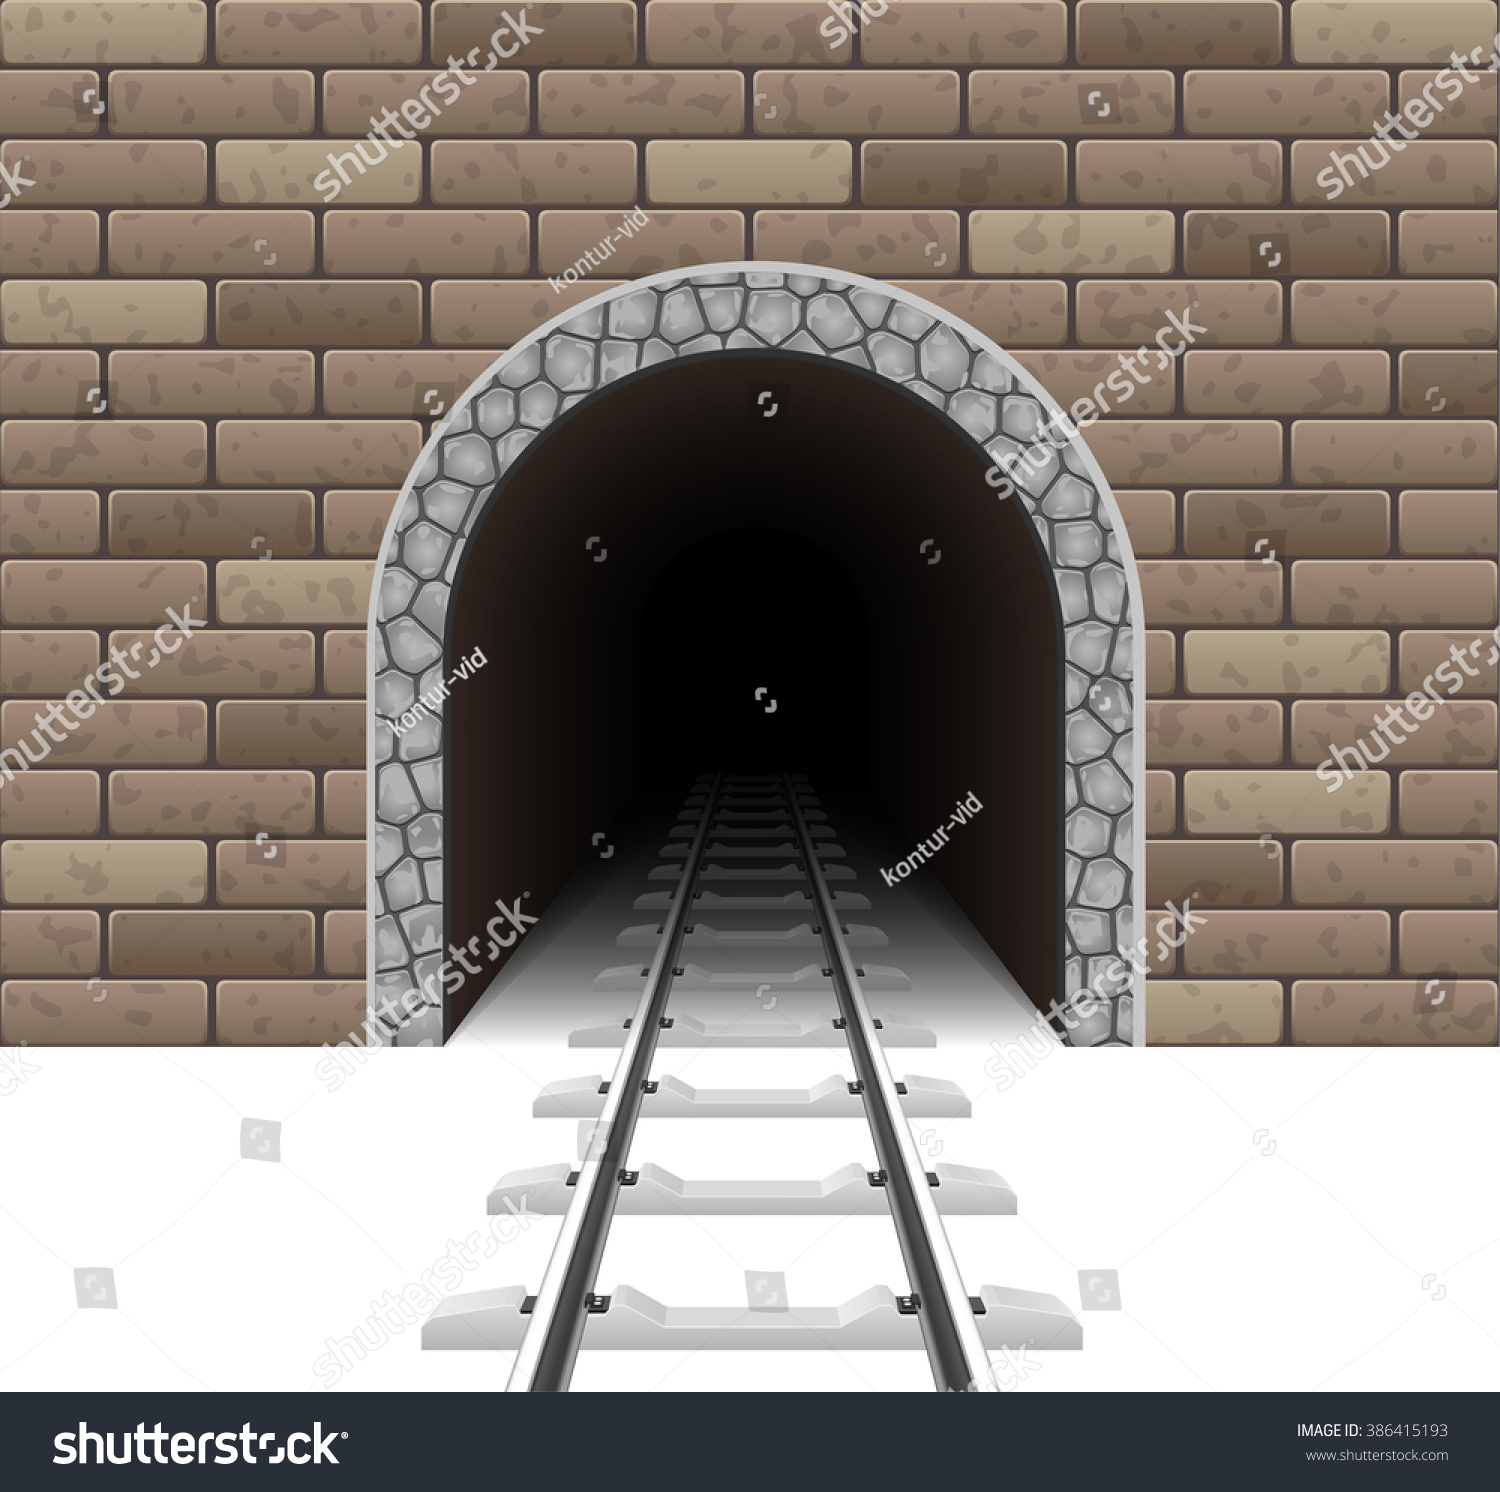 Railway Tunnel Vector Illustration Isolated On Stock Vector (Royalty ...